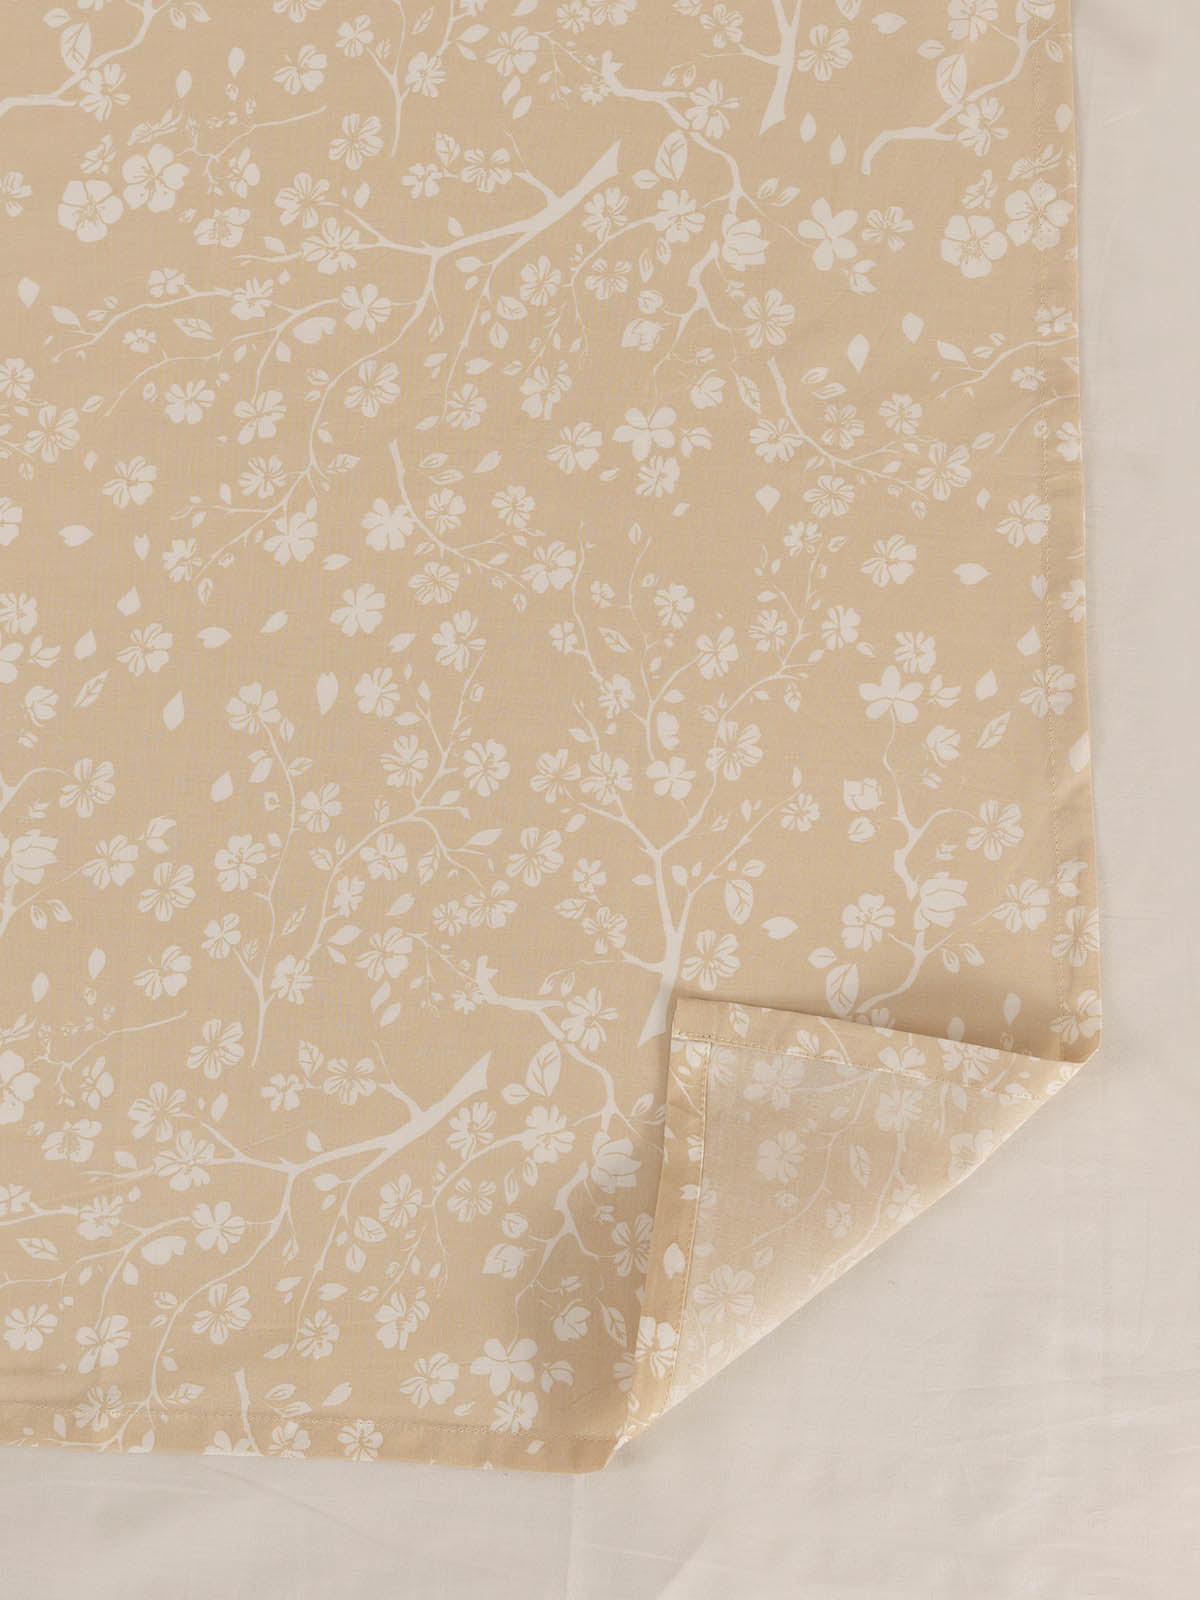 Cherry Blossom Printed Cotton Flat Sheet - Cream